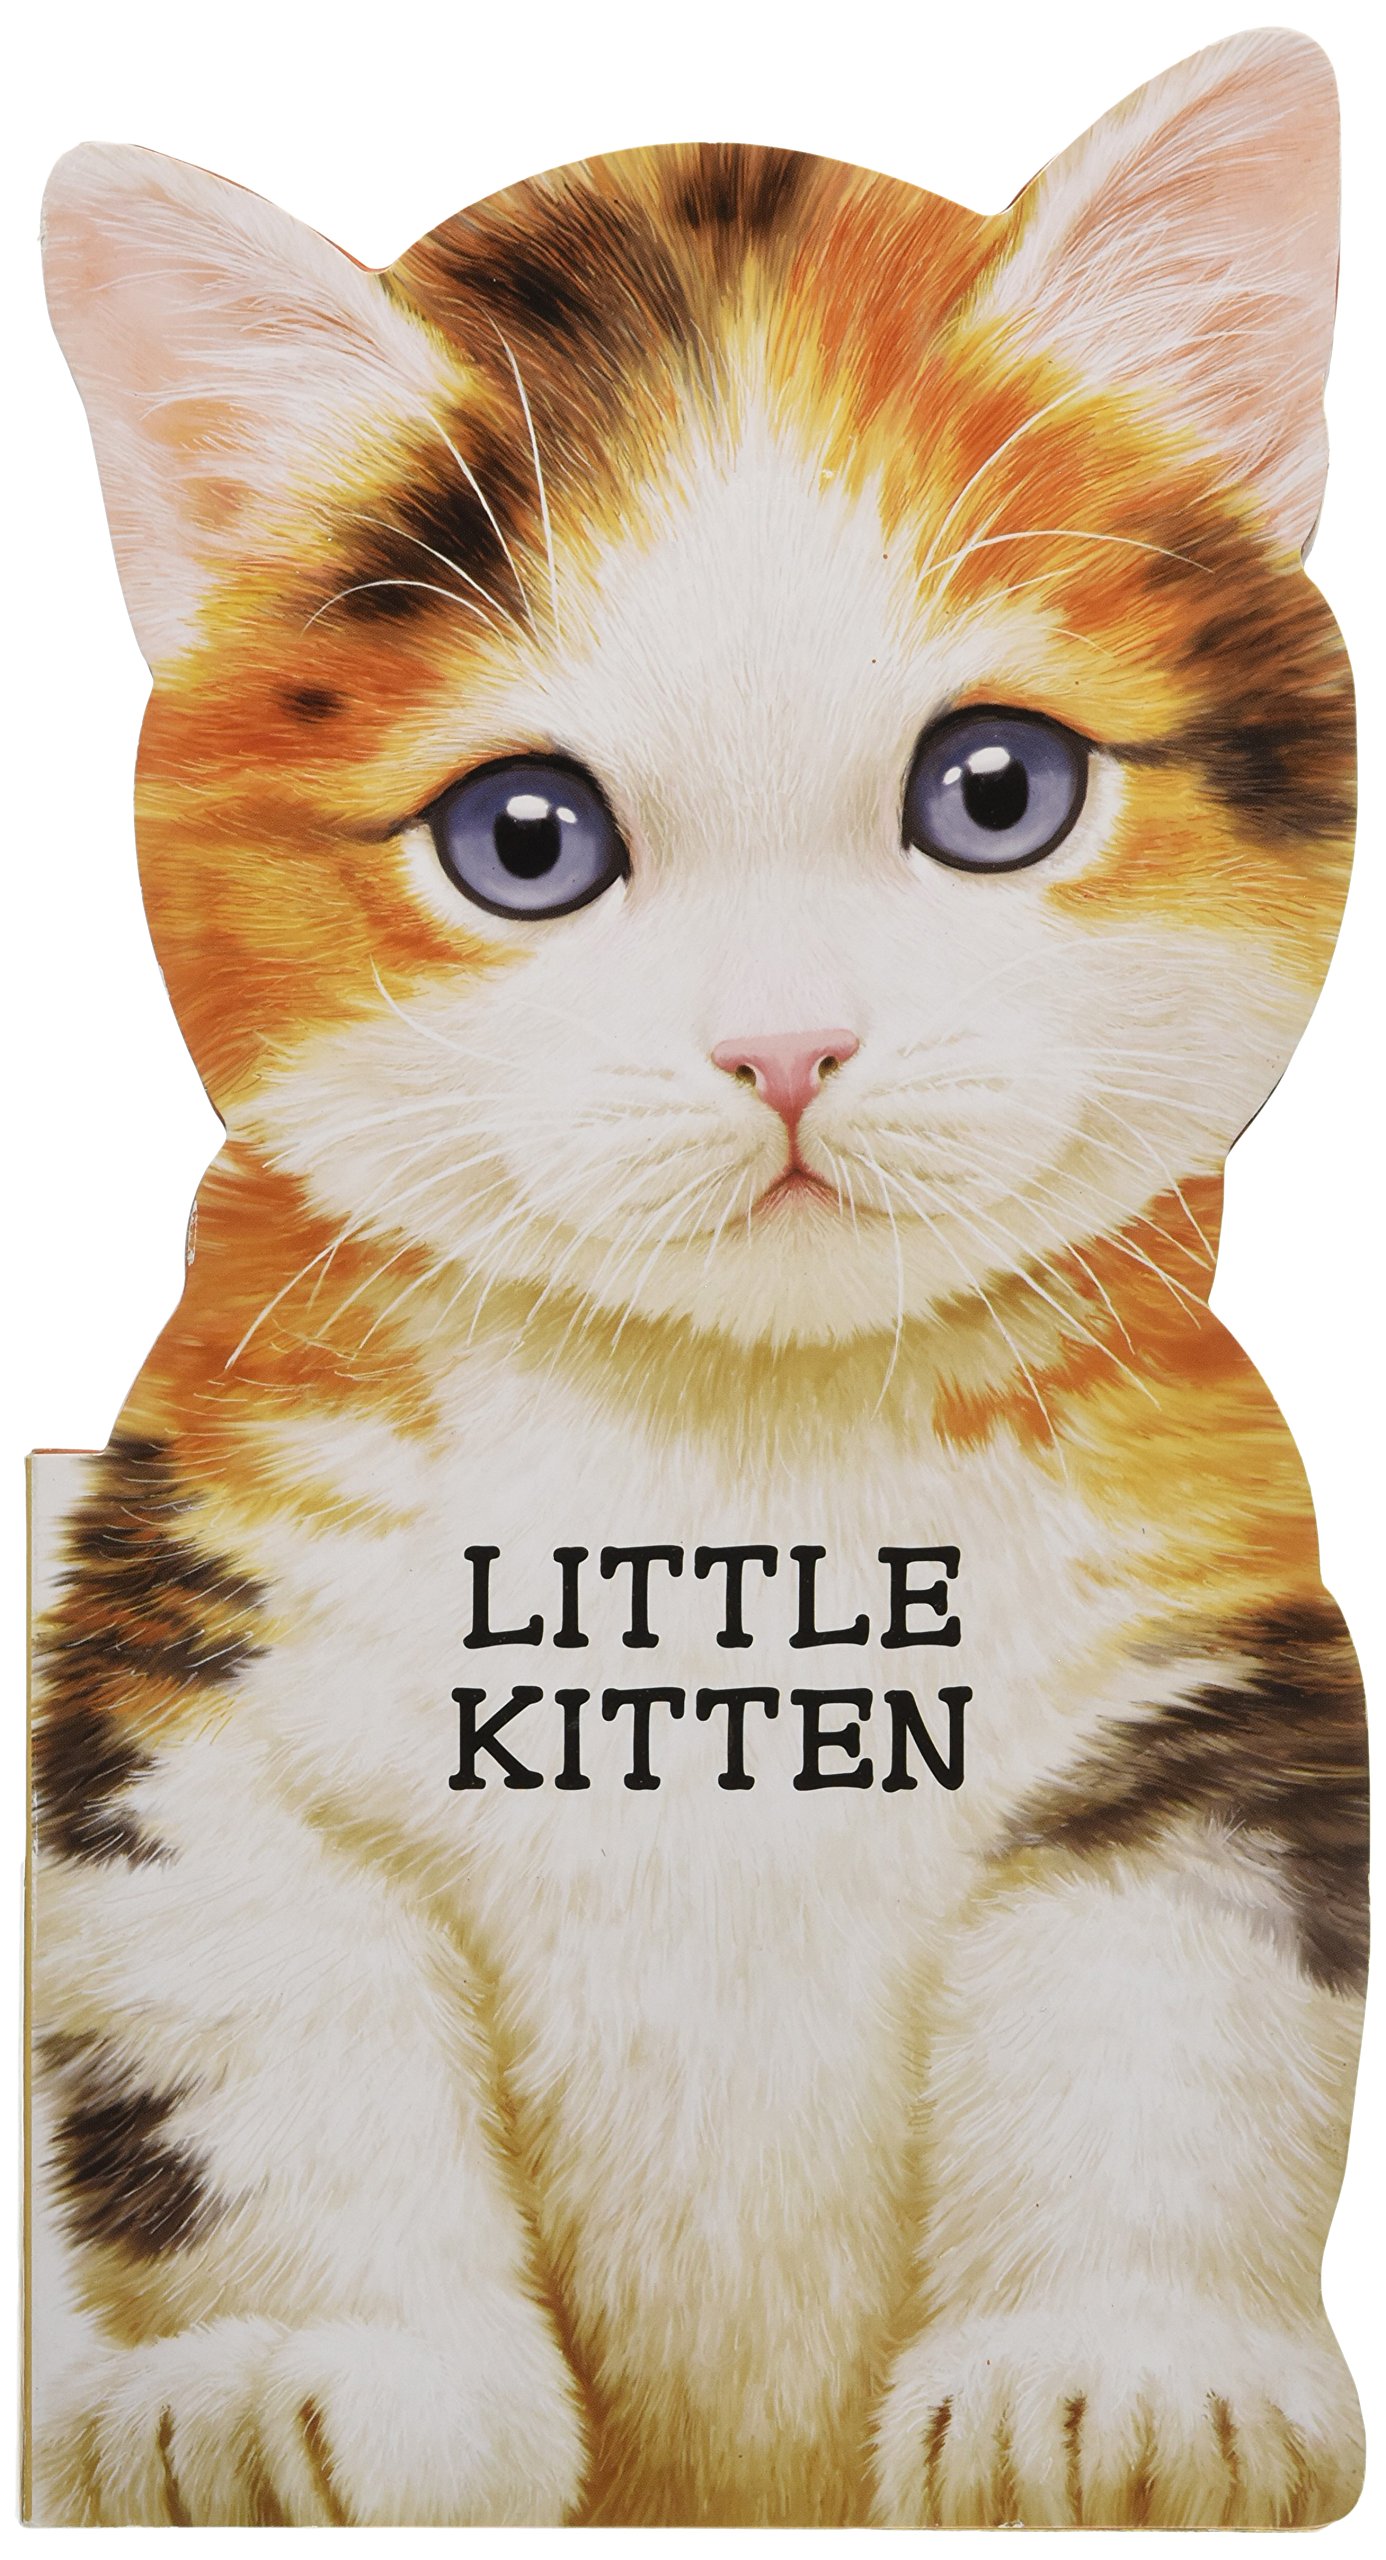 Little Kitten (Look At Me Books): L Rigo: 9780764165238: Amazon.com ...